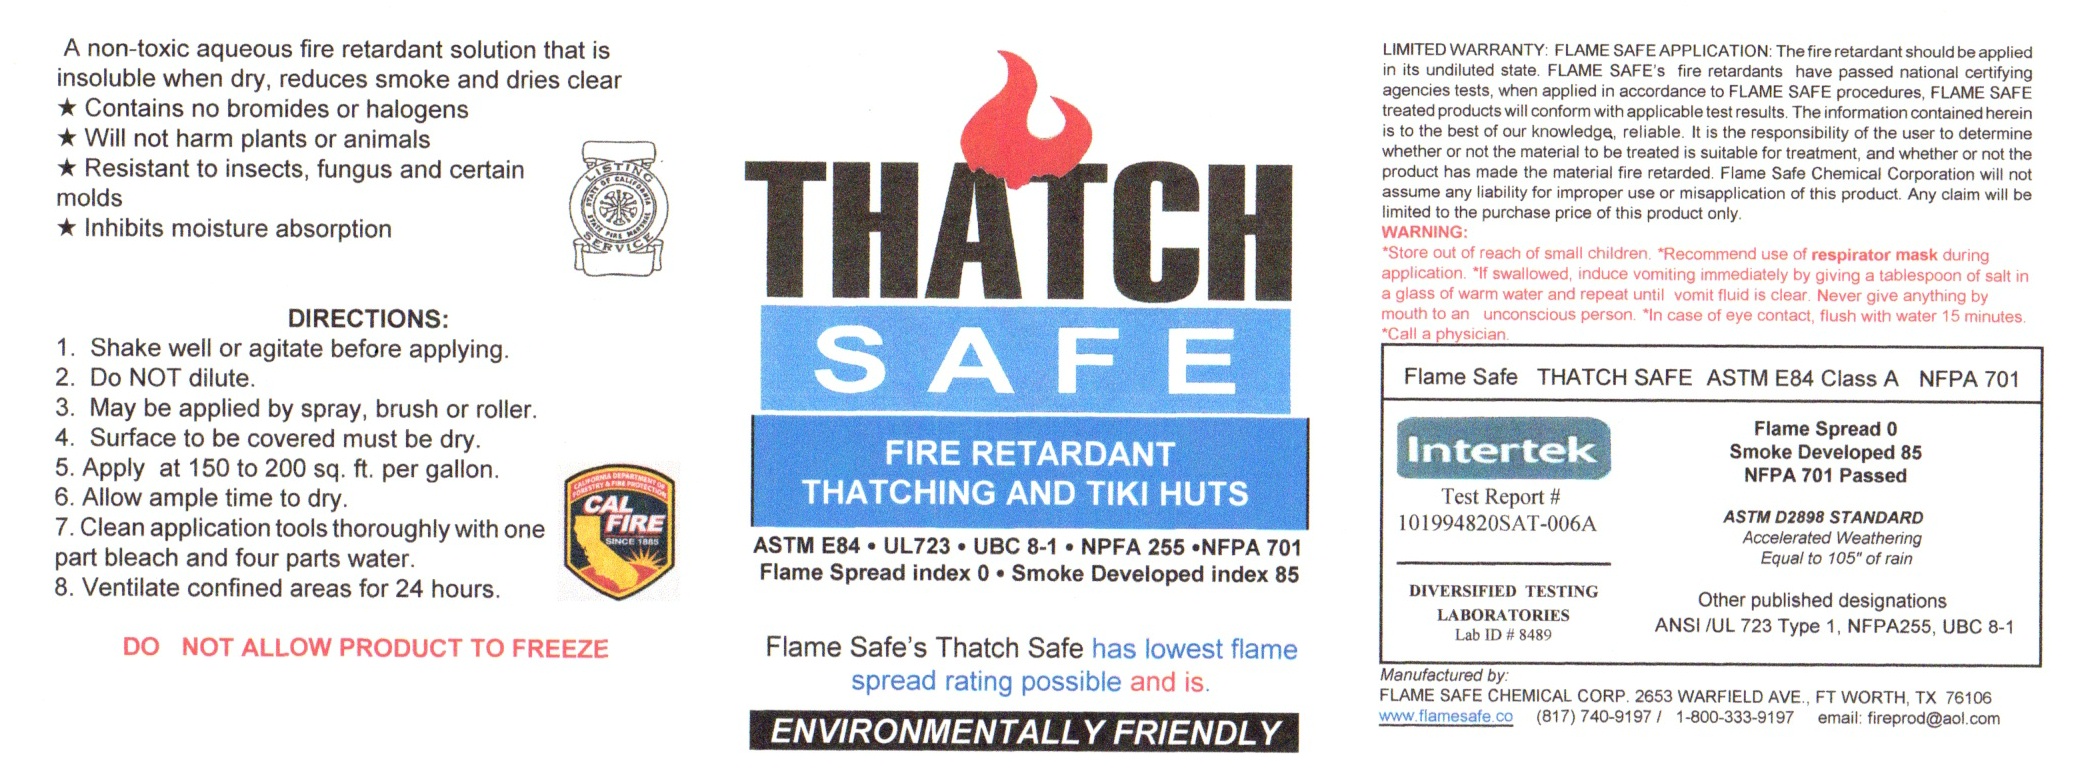 Thatch Safe fire retardant label